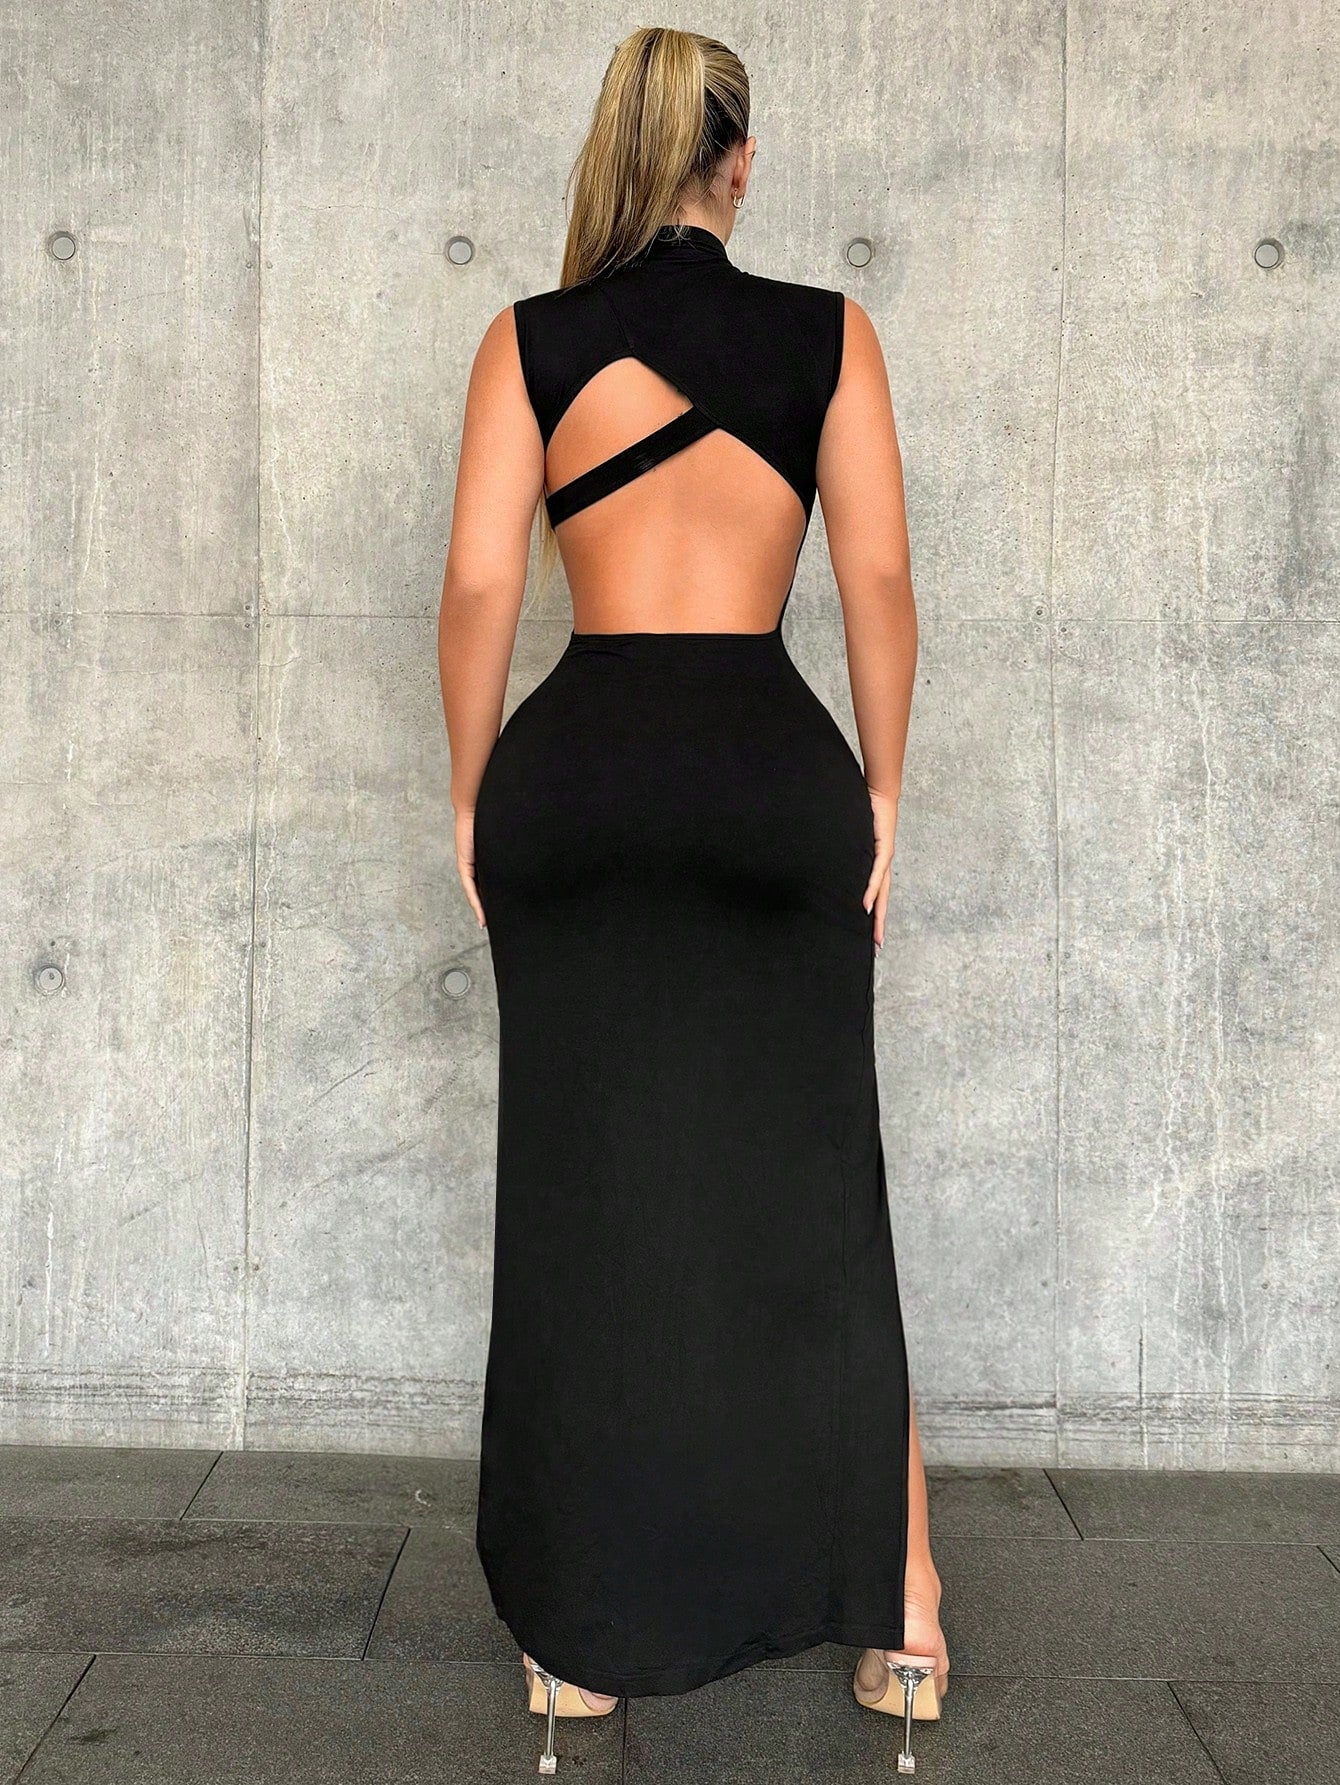 LLstyle Sleeveless Black Dress With A High Split Back